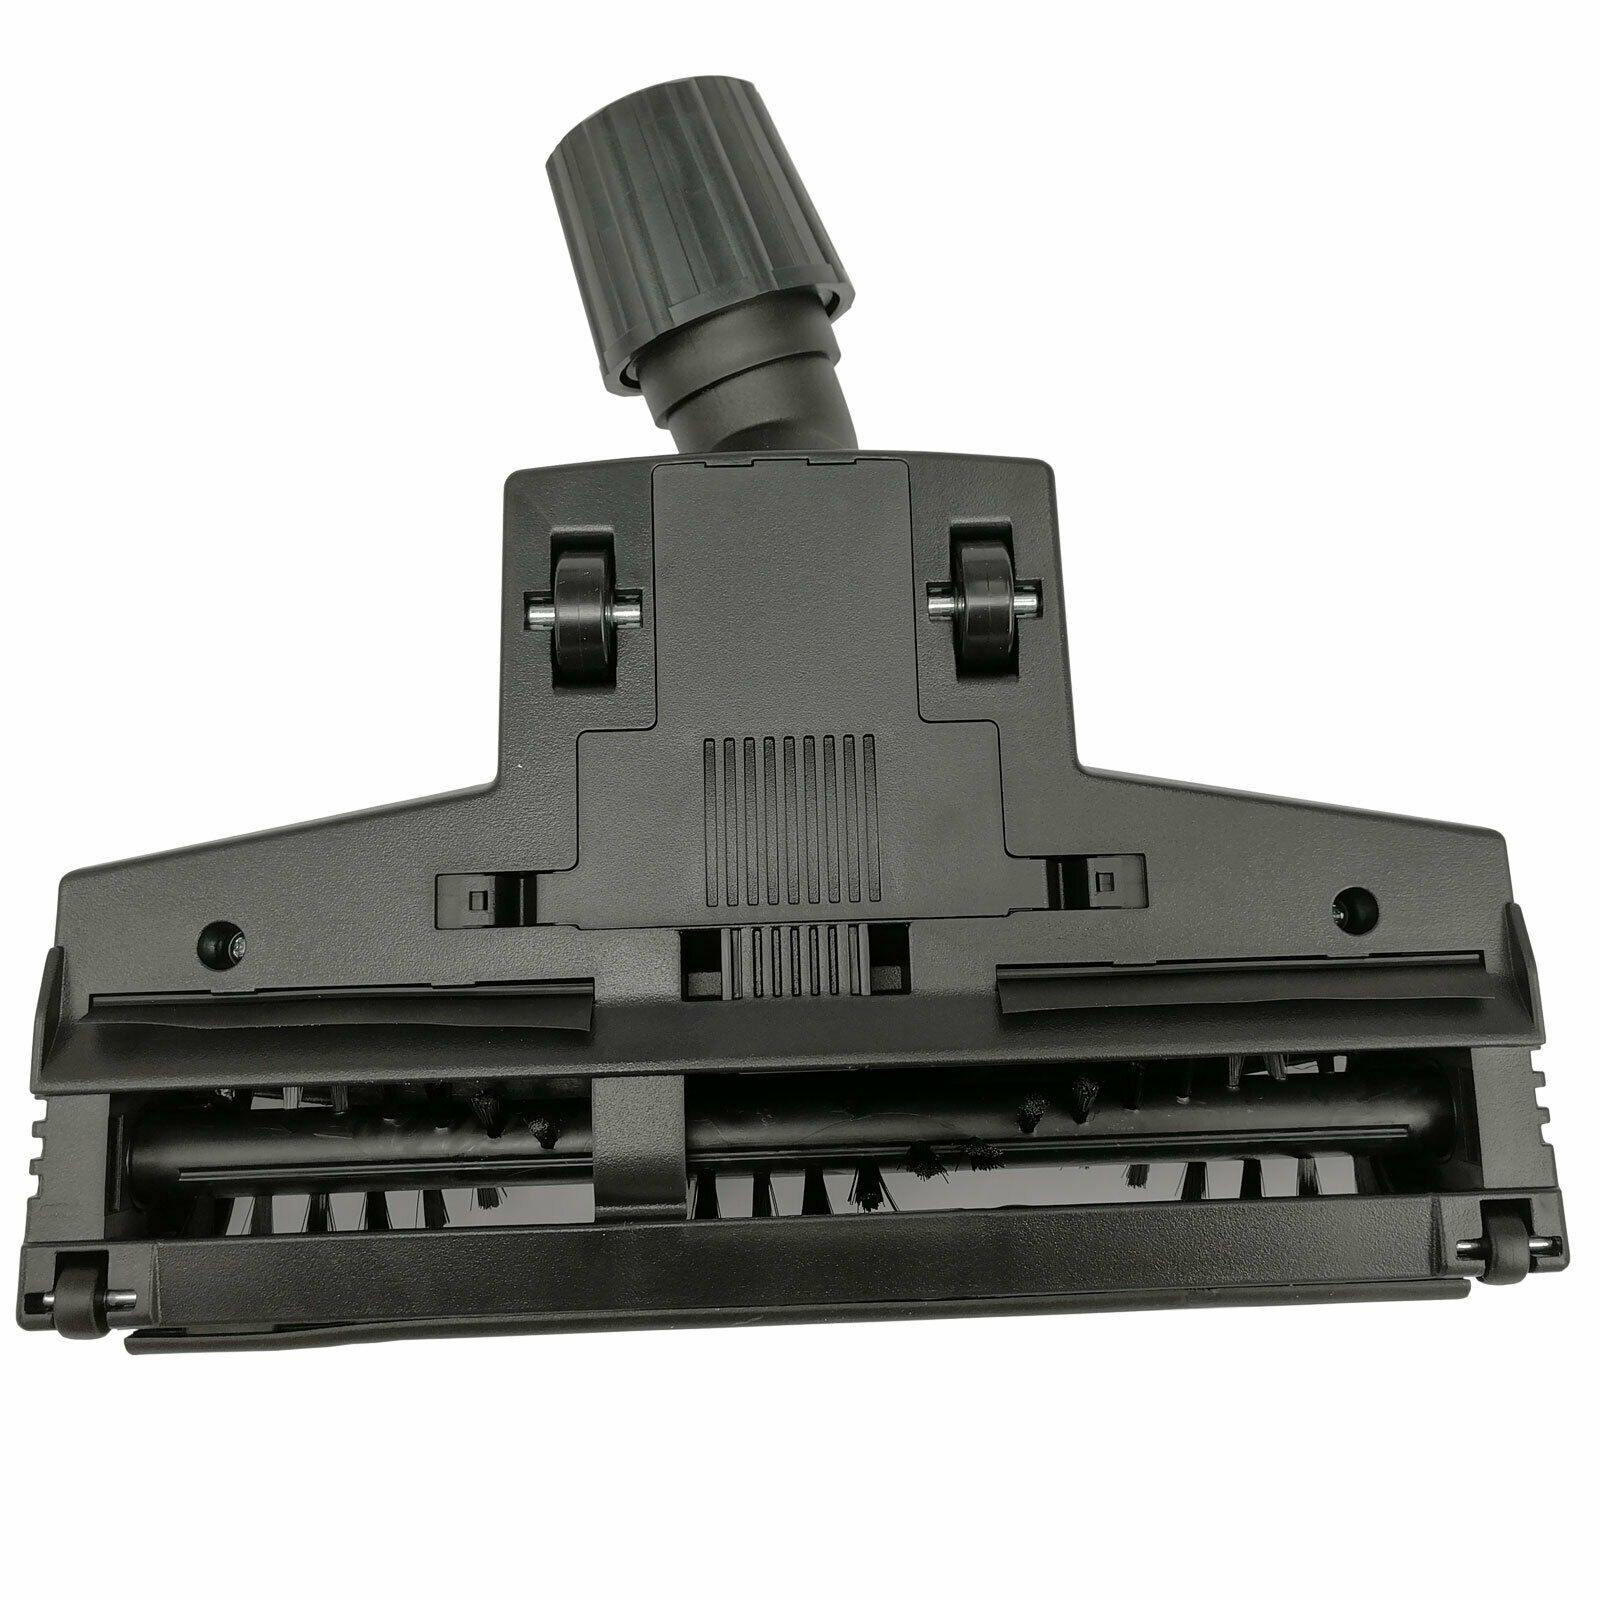 Turbo Head Floor Nozzle Brush For Karcher DS 6 -1.195-220.0 VC 6.100 1.195-507.0 Sparesbarn